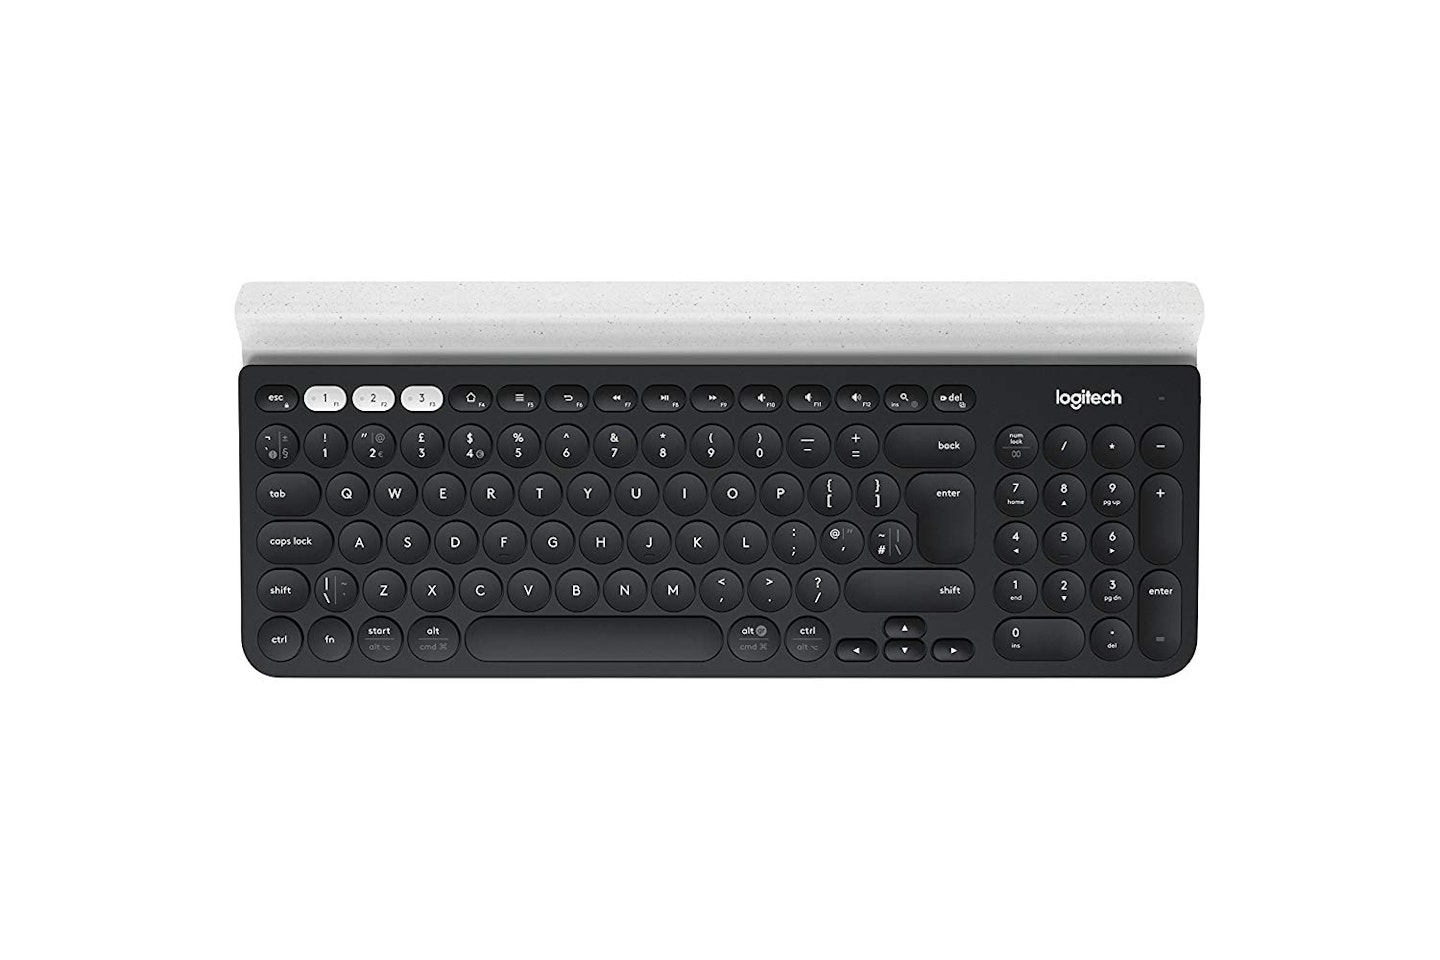 - one of the best wireless keyboards